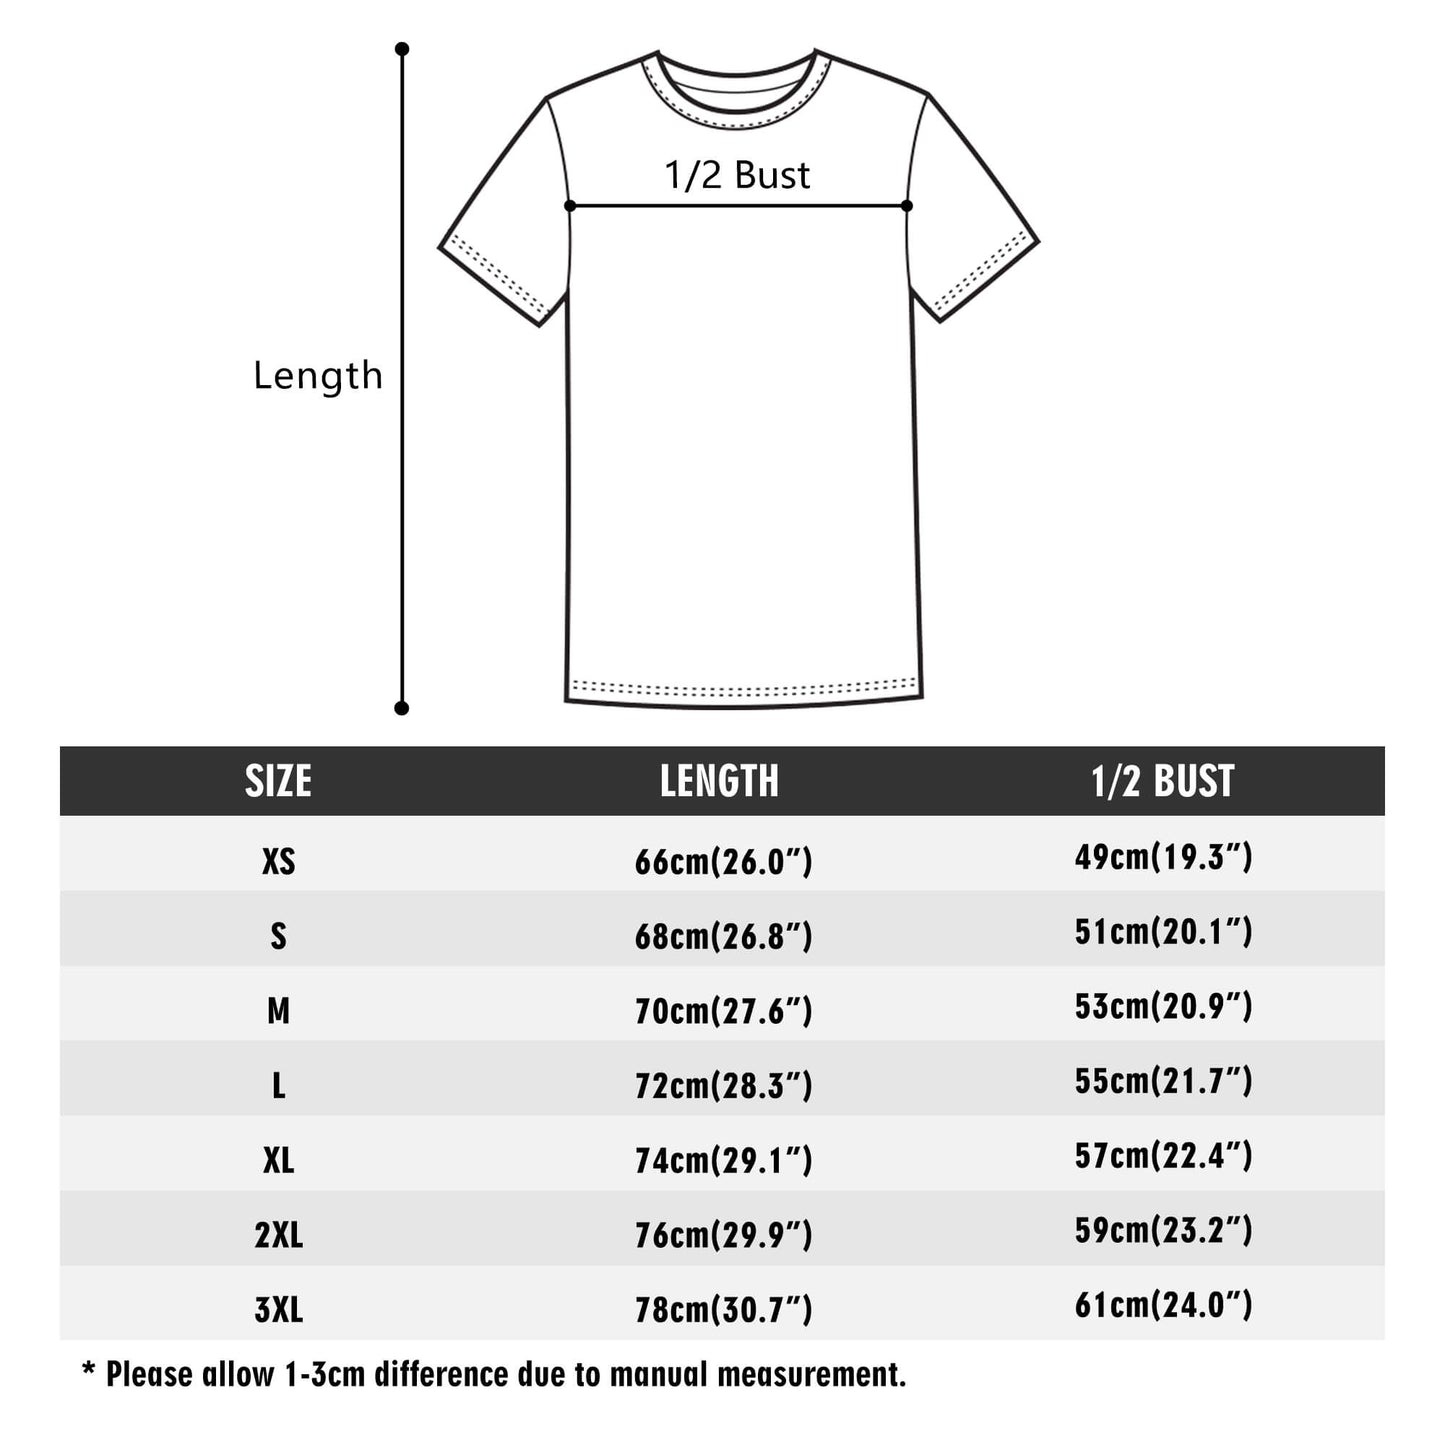 DJMD Mens Embroidered Chest Design Cotton T-shirt